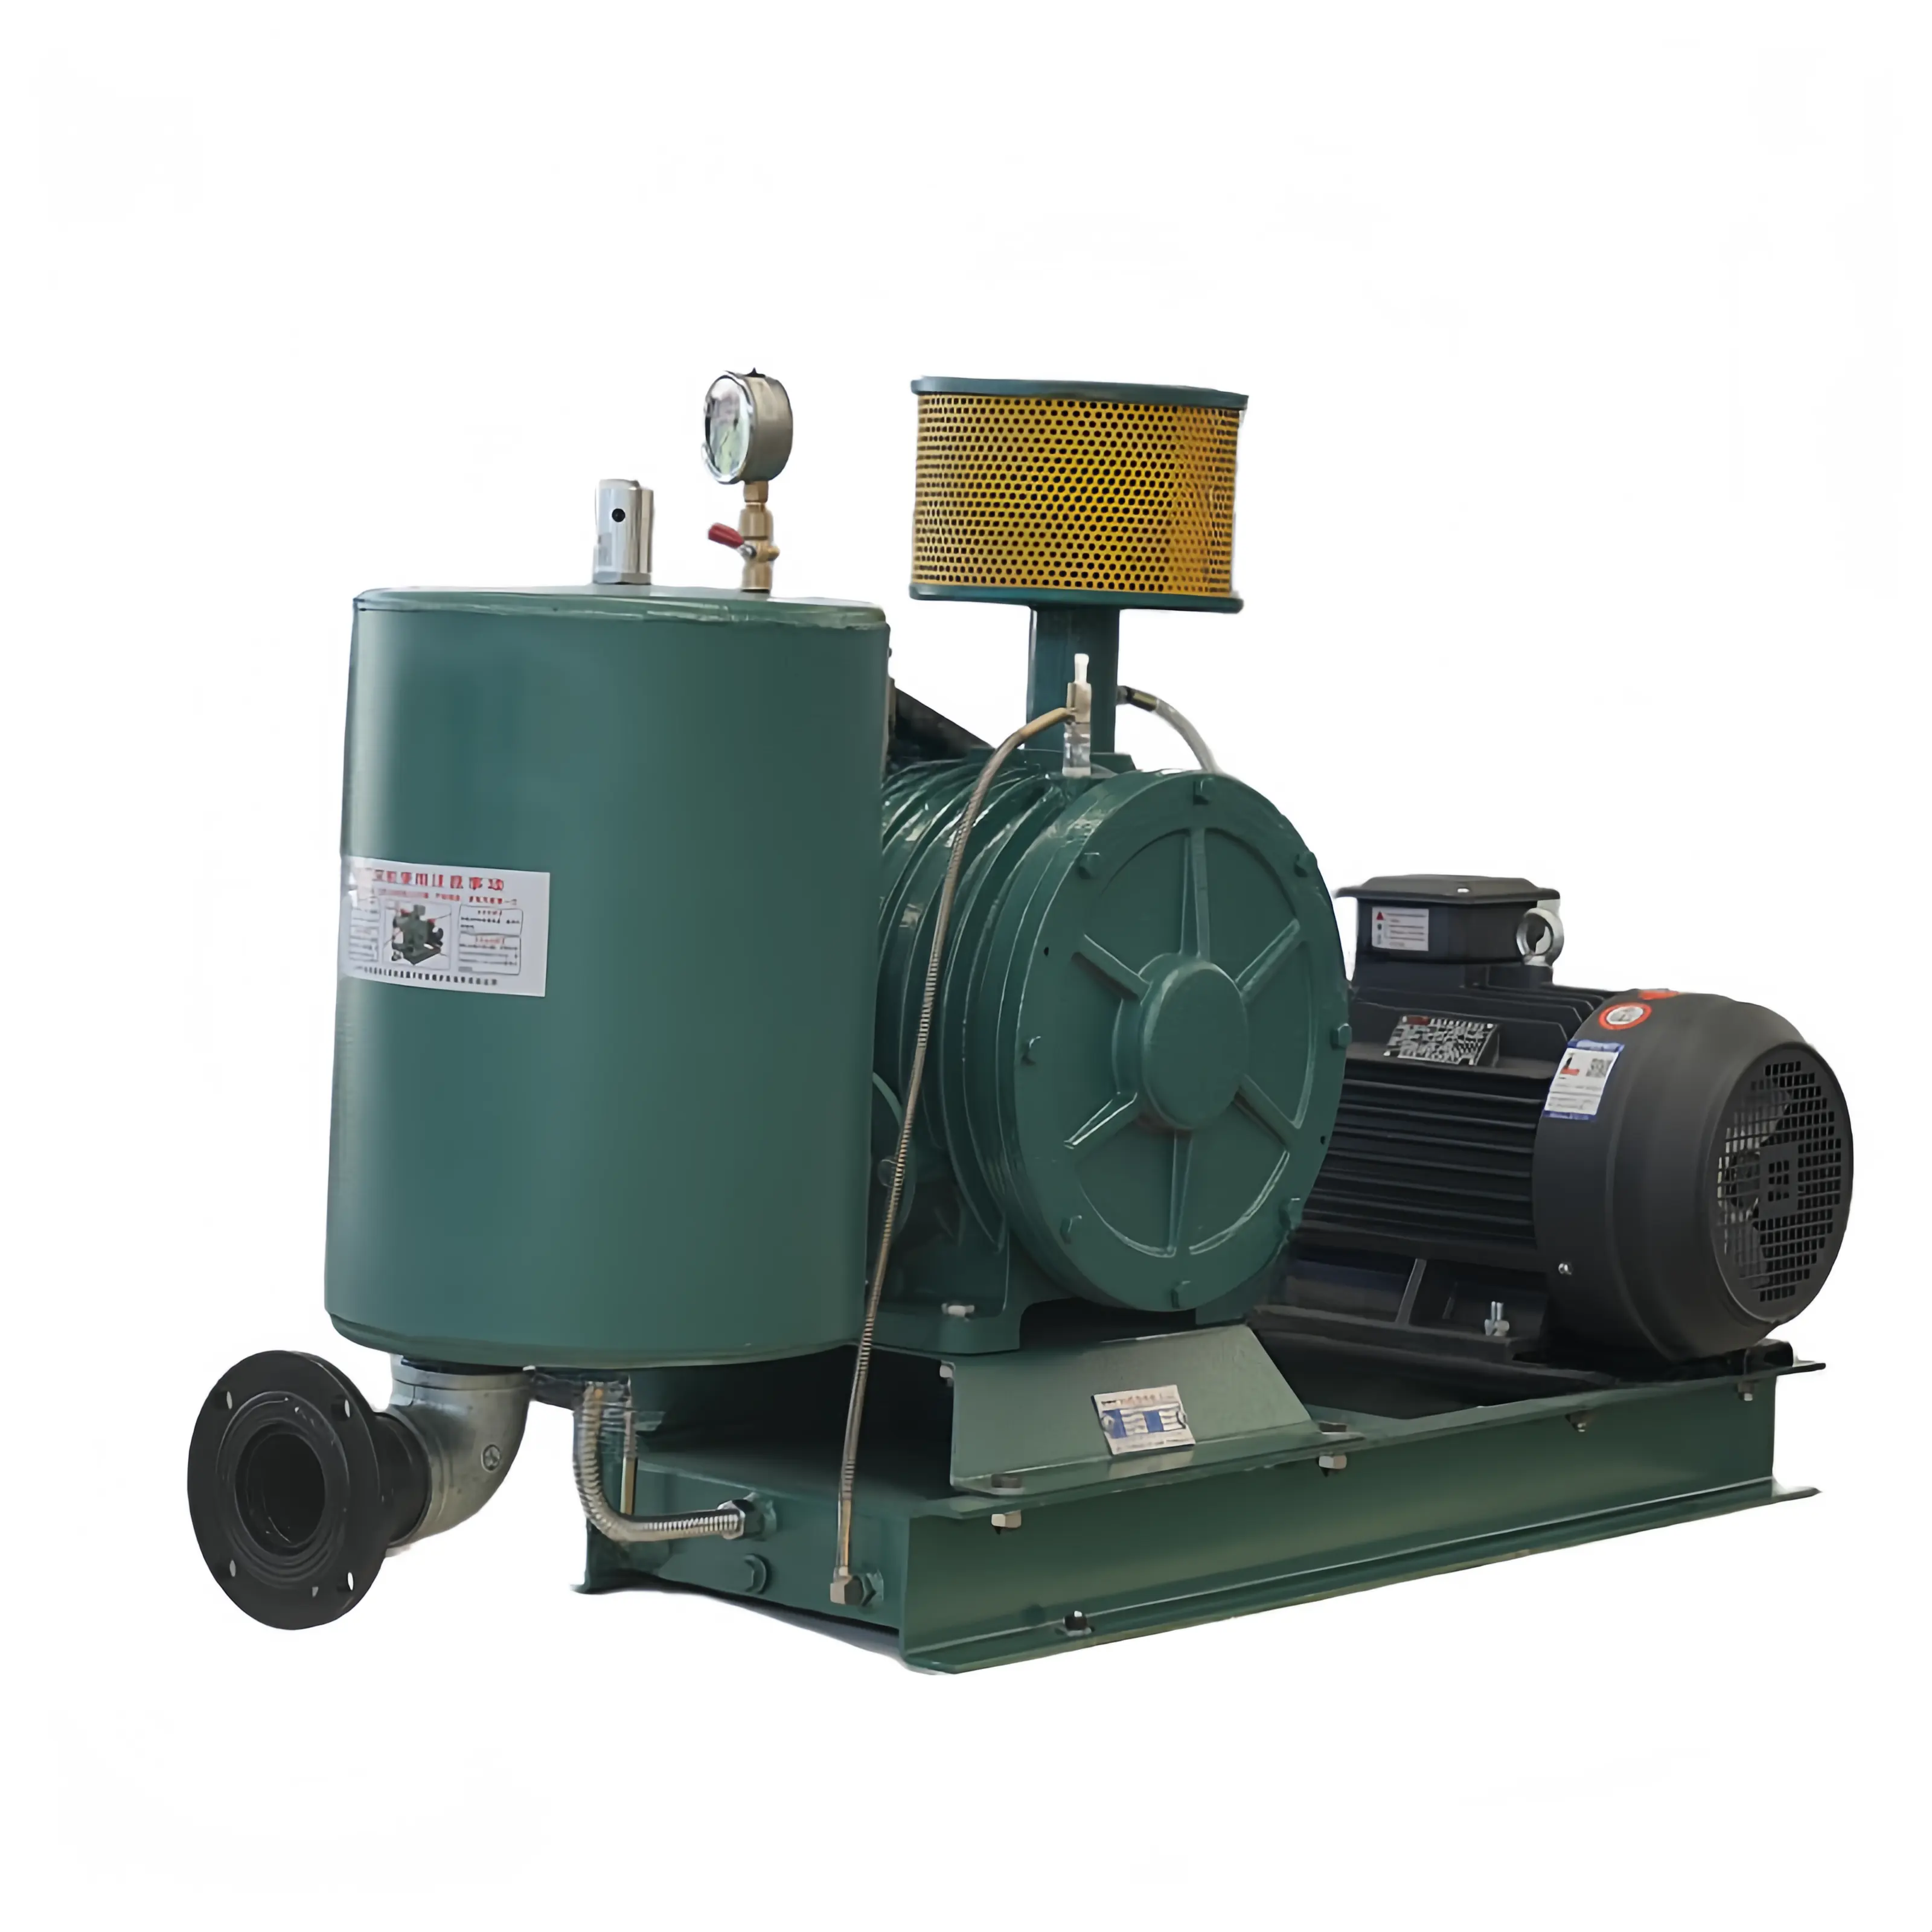 JYC small leaf collectorindustrial hoover acquicolo robotech biogas cross flow radiale ad alta pressione foglia gonfiabile